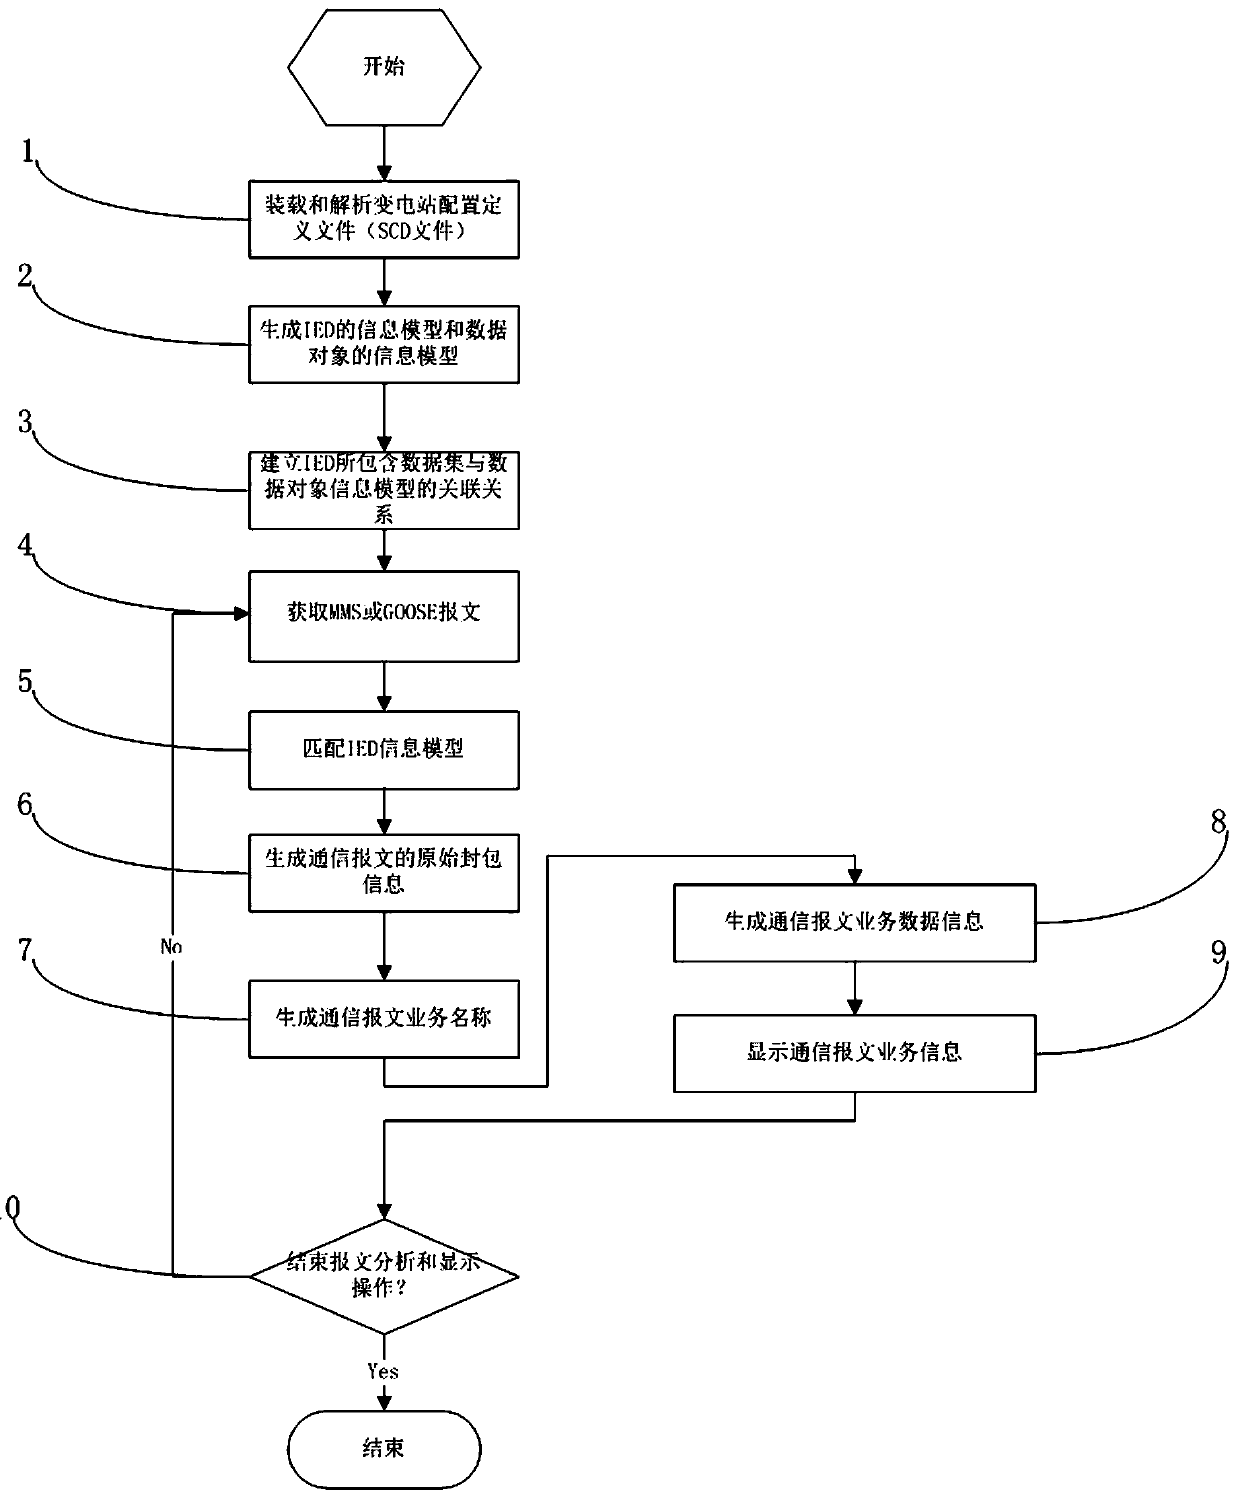 Method for realizing visualization of intelligent substation IEC61850 communication message